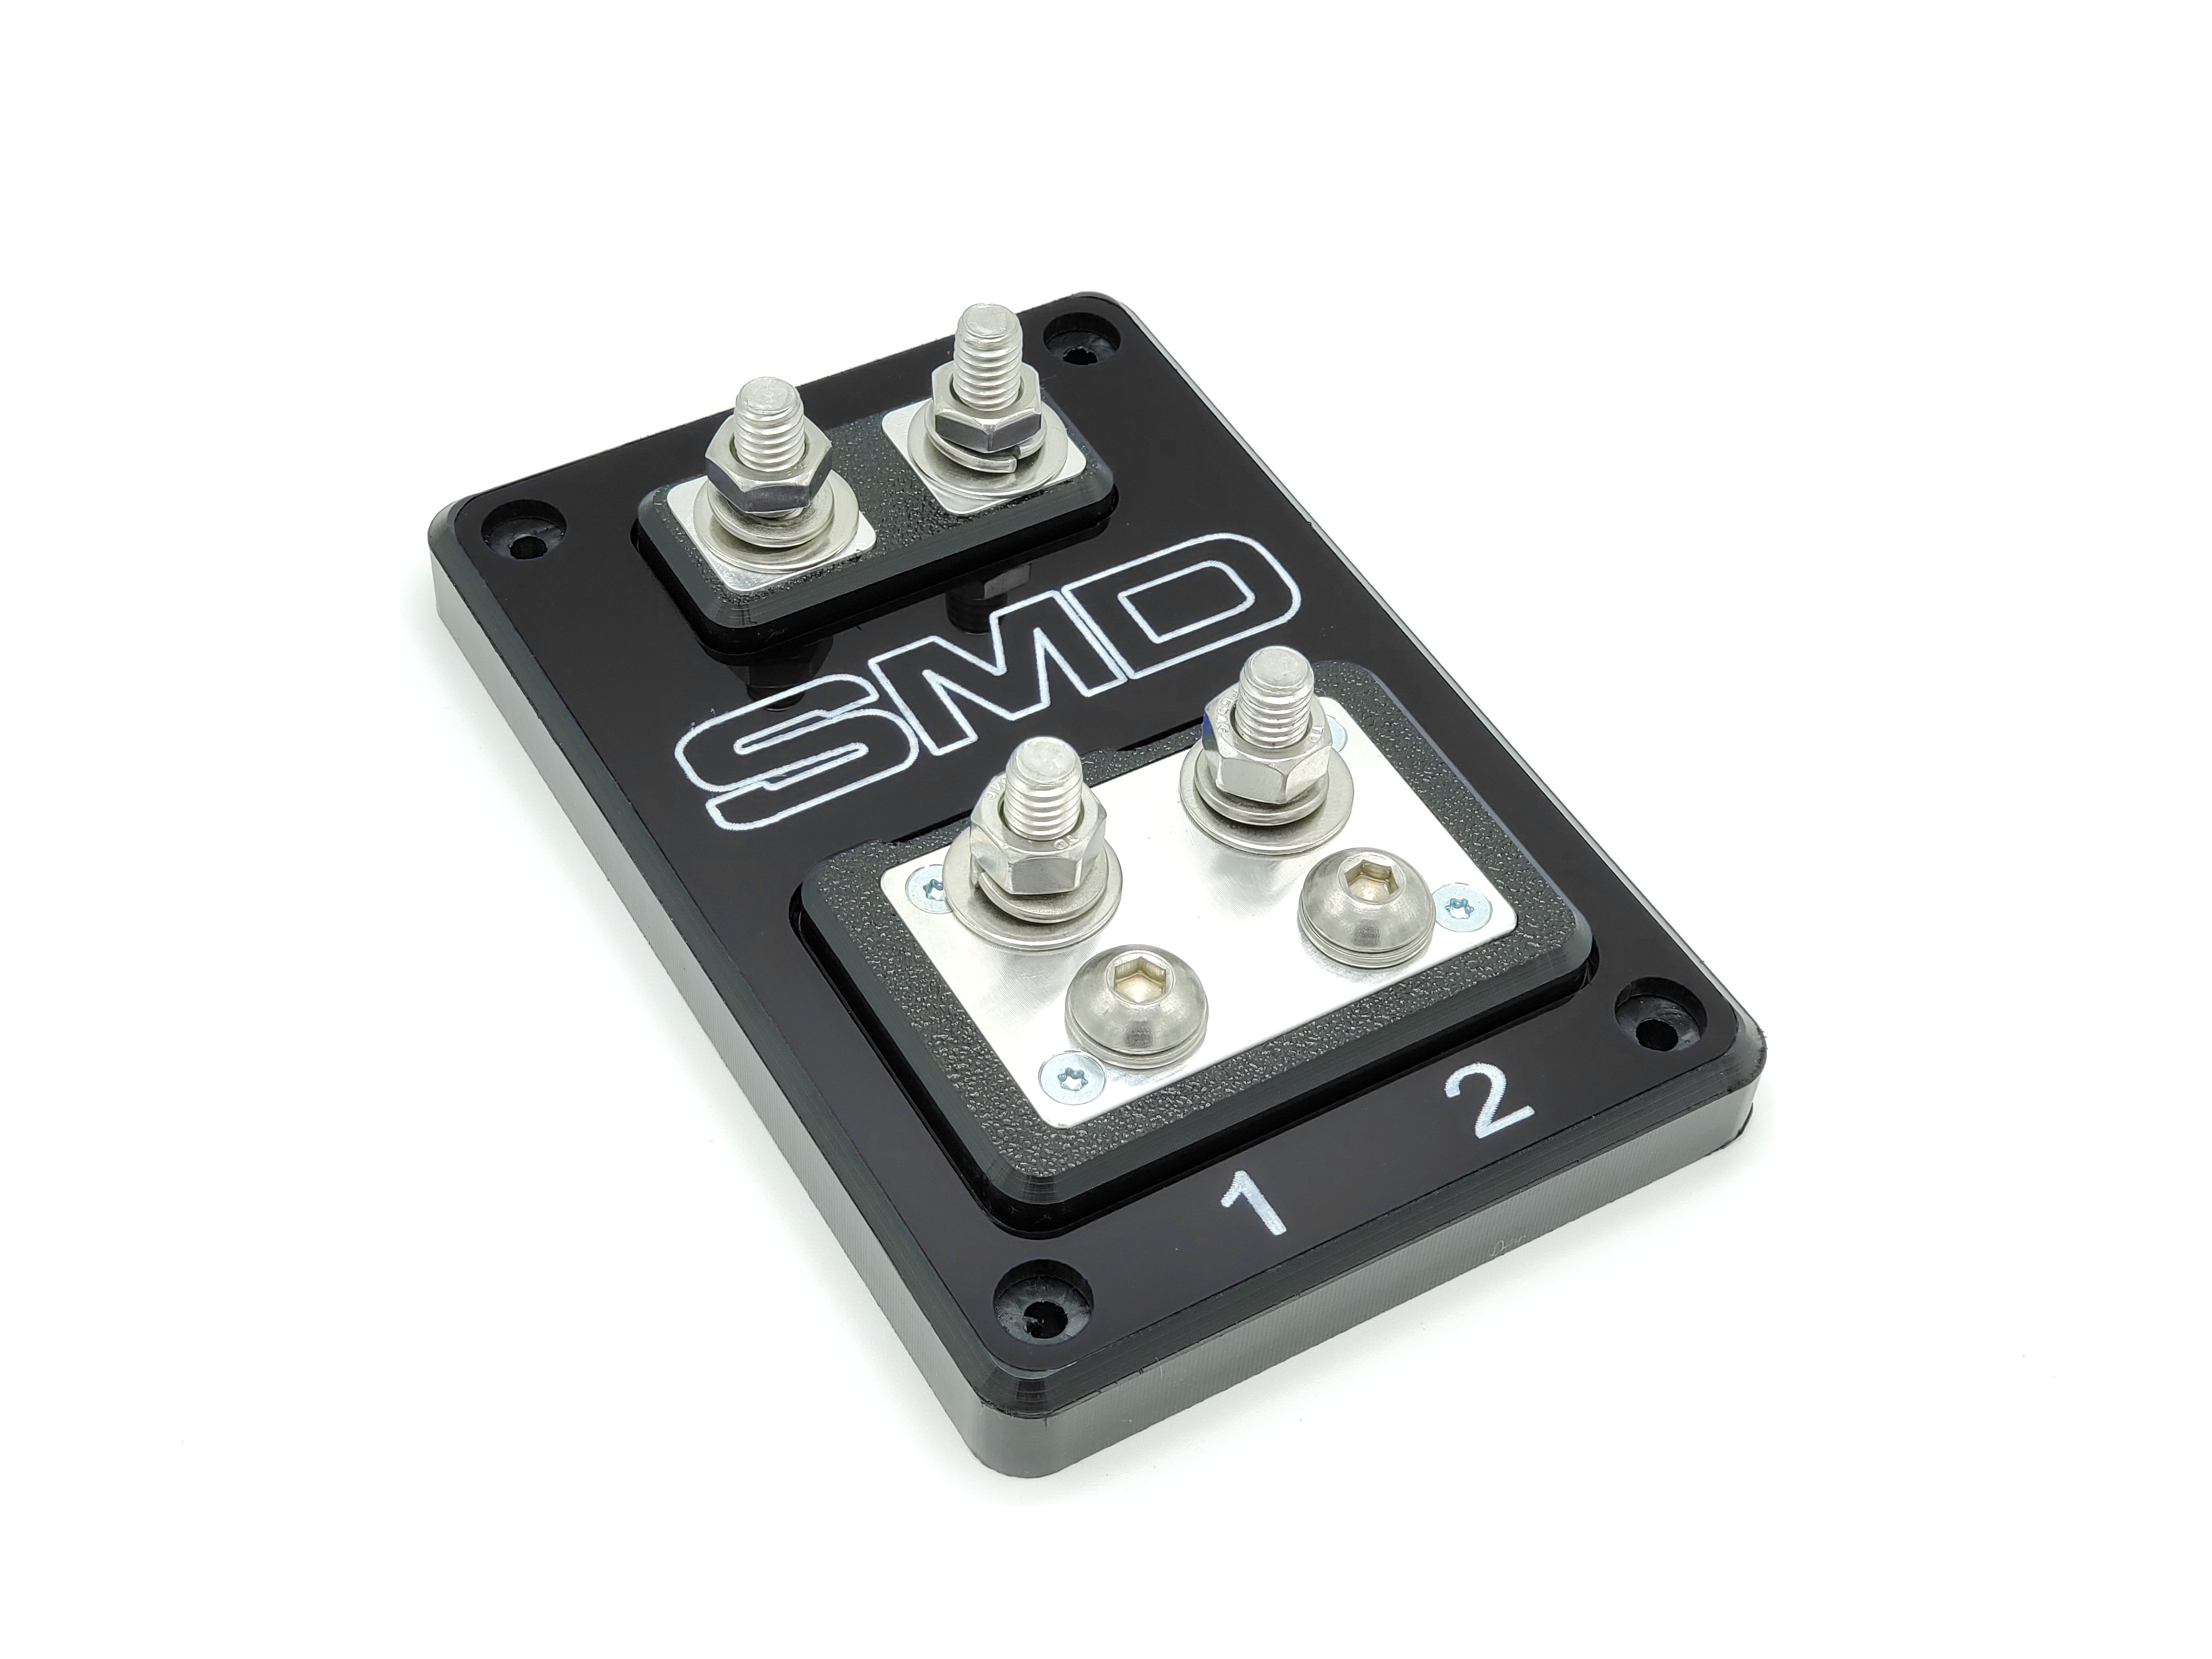 SMD Double XL 2-Spot ANL Fuse Block - Steve Meade Designs